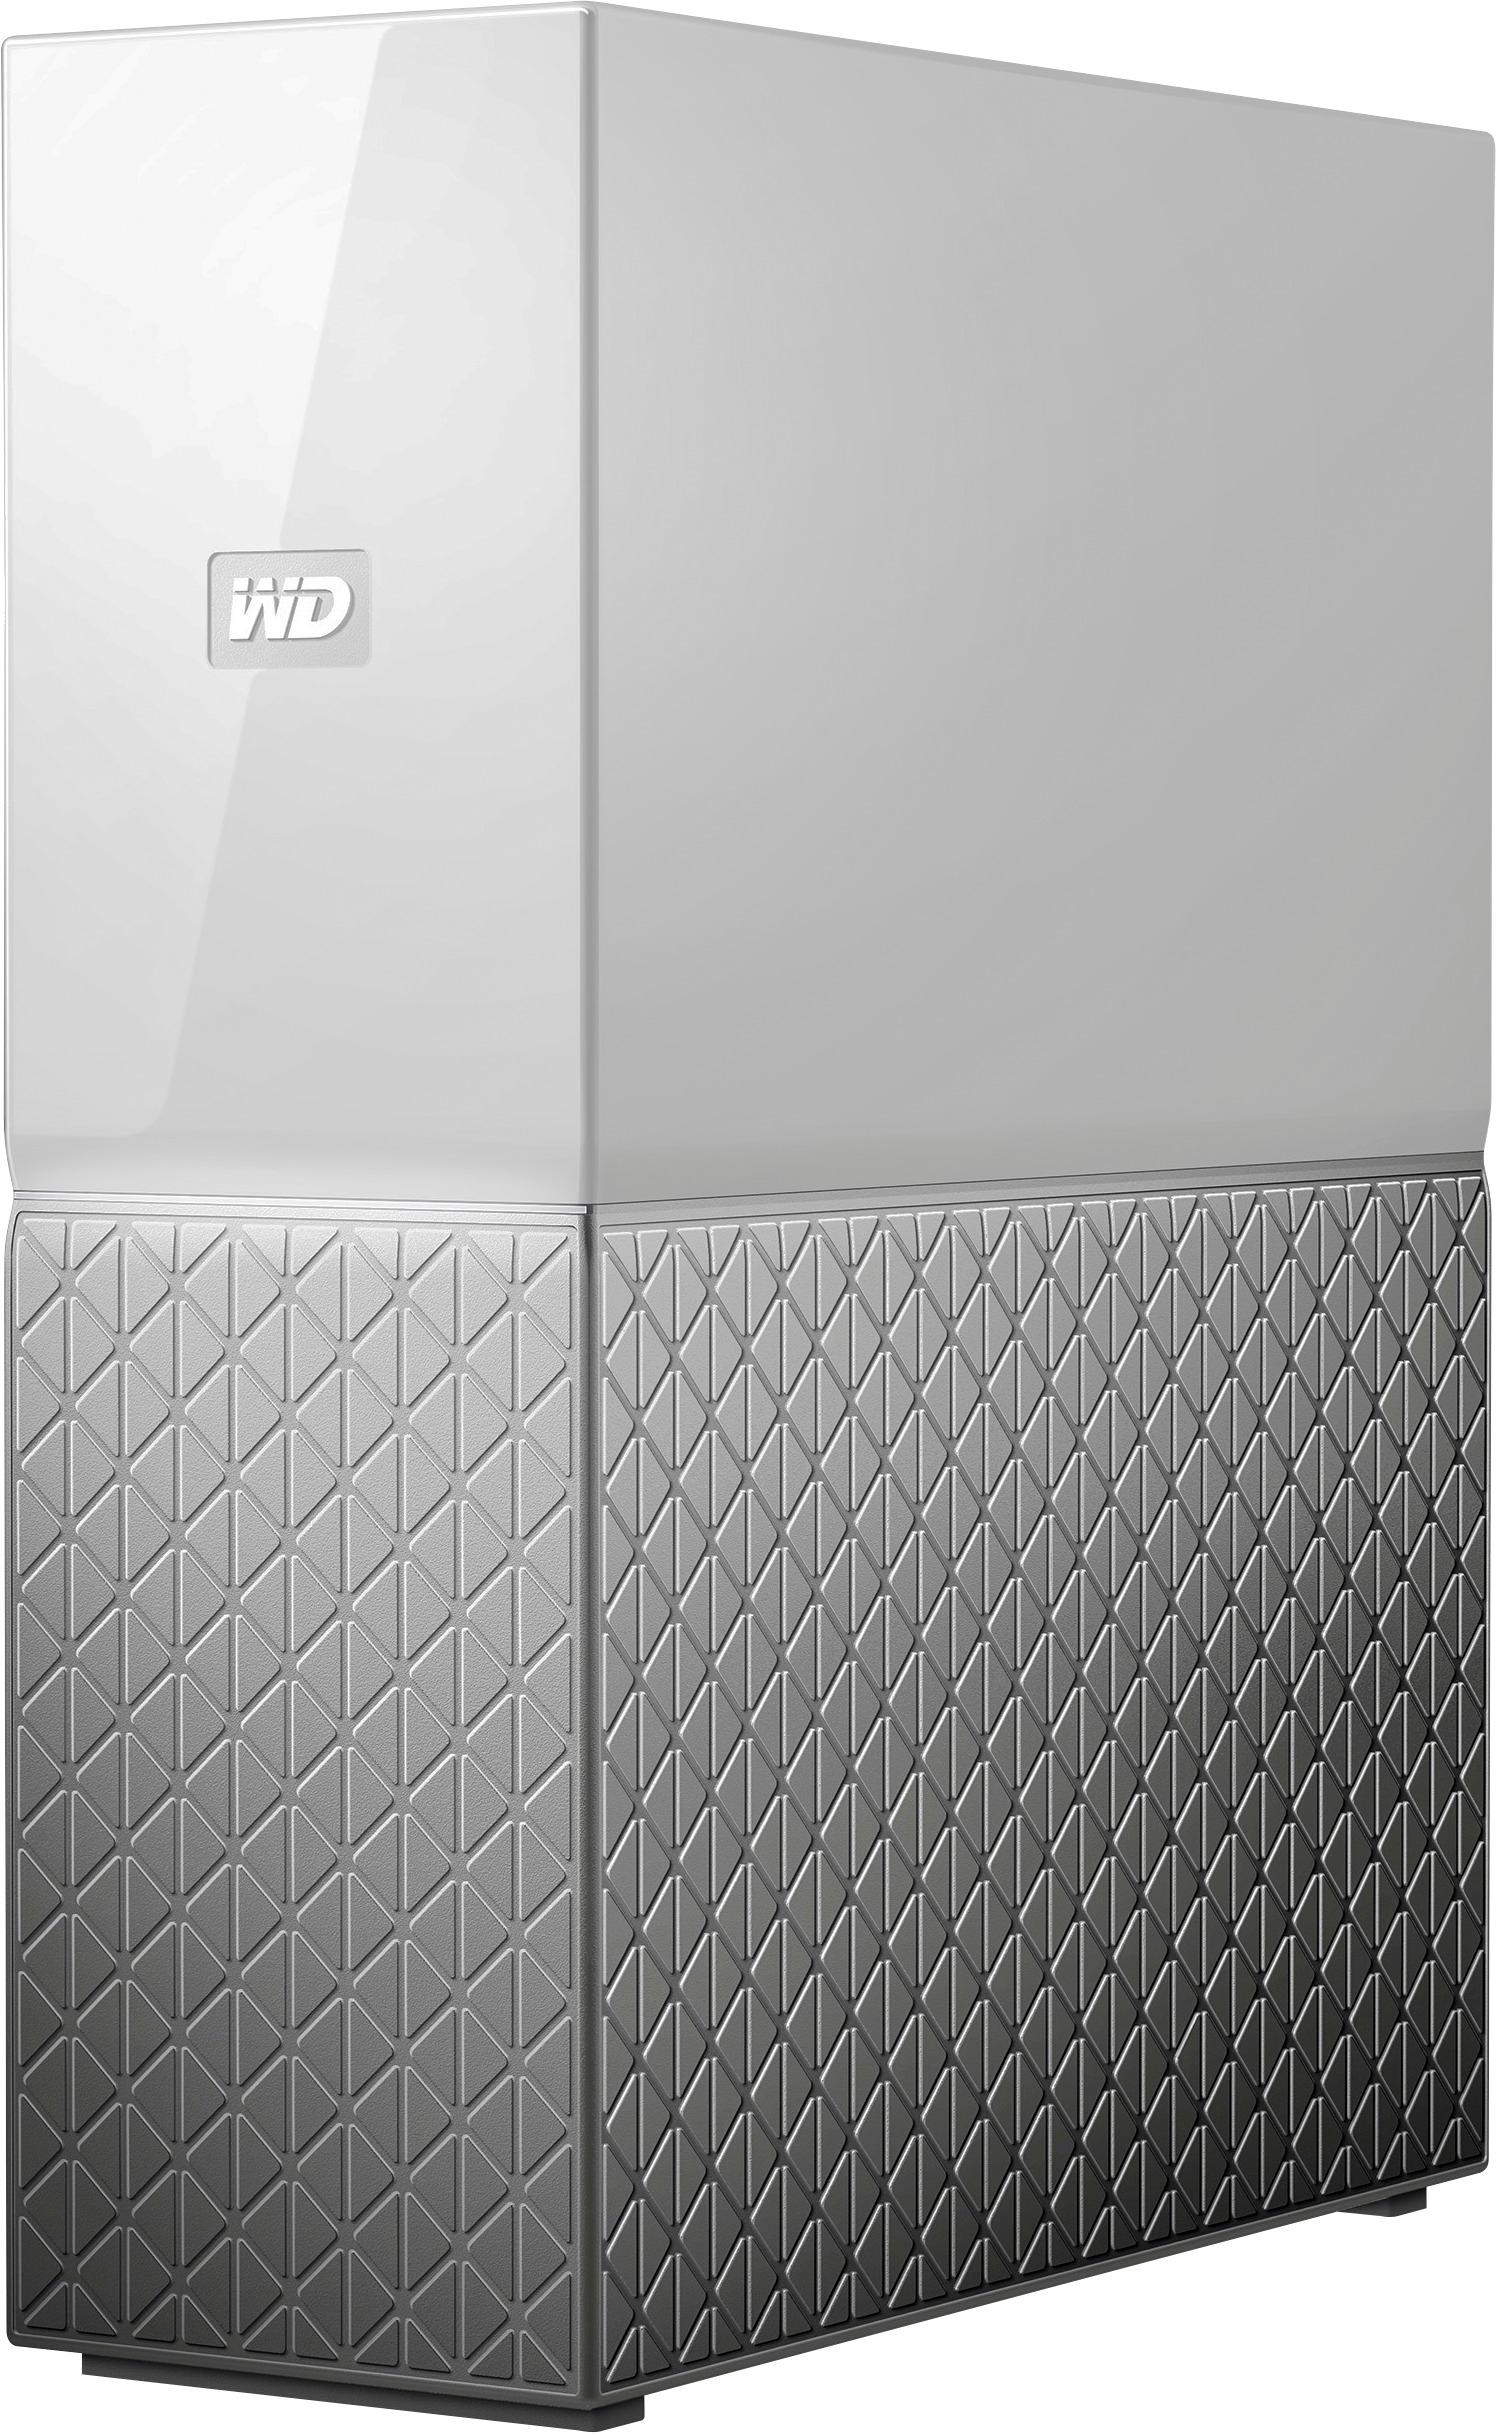 Angle View: Crucial - MX500 1TB Internal SSD SATA